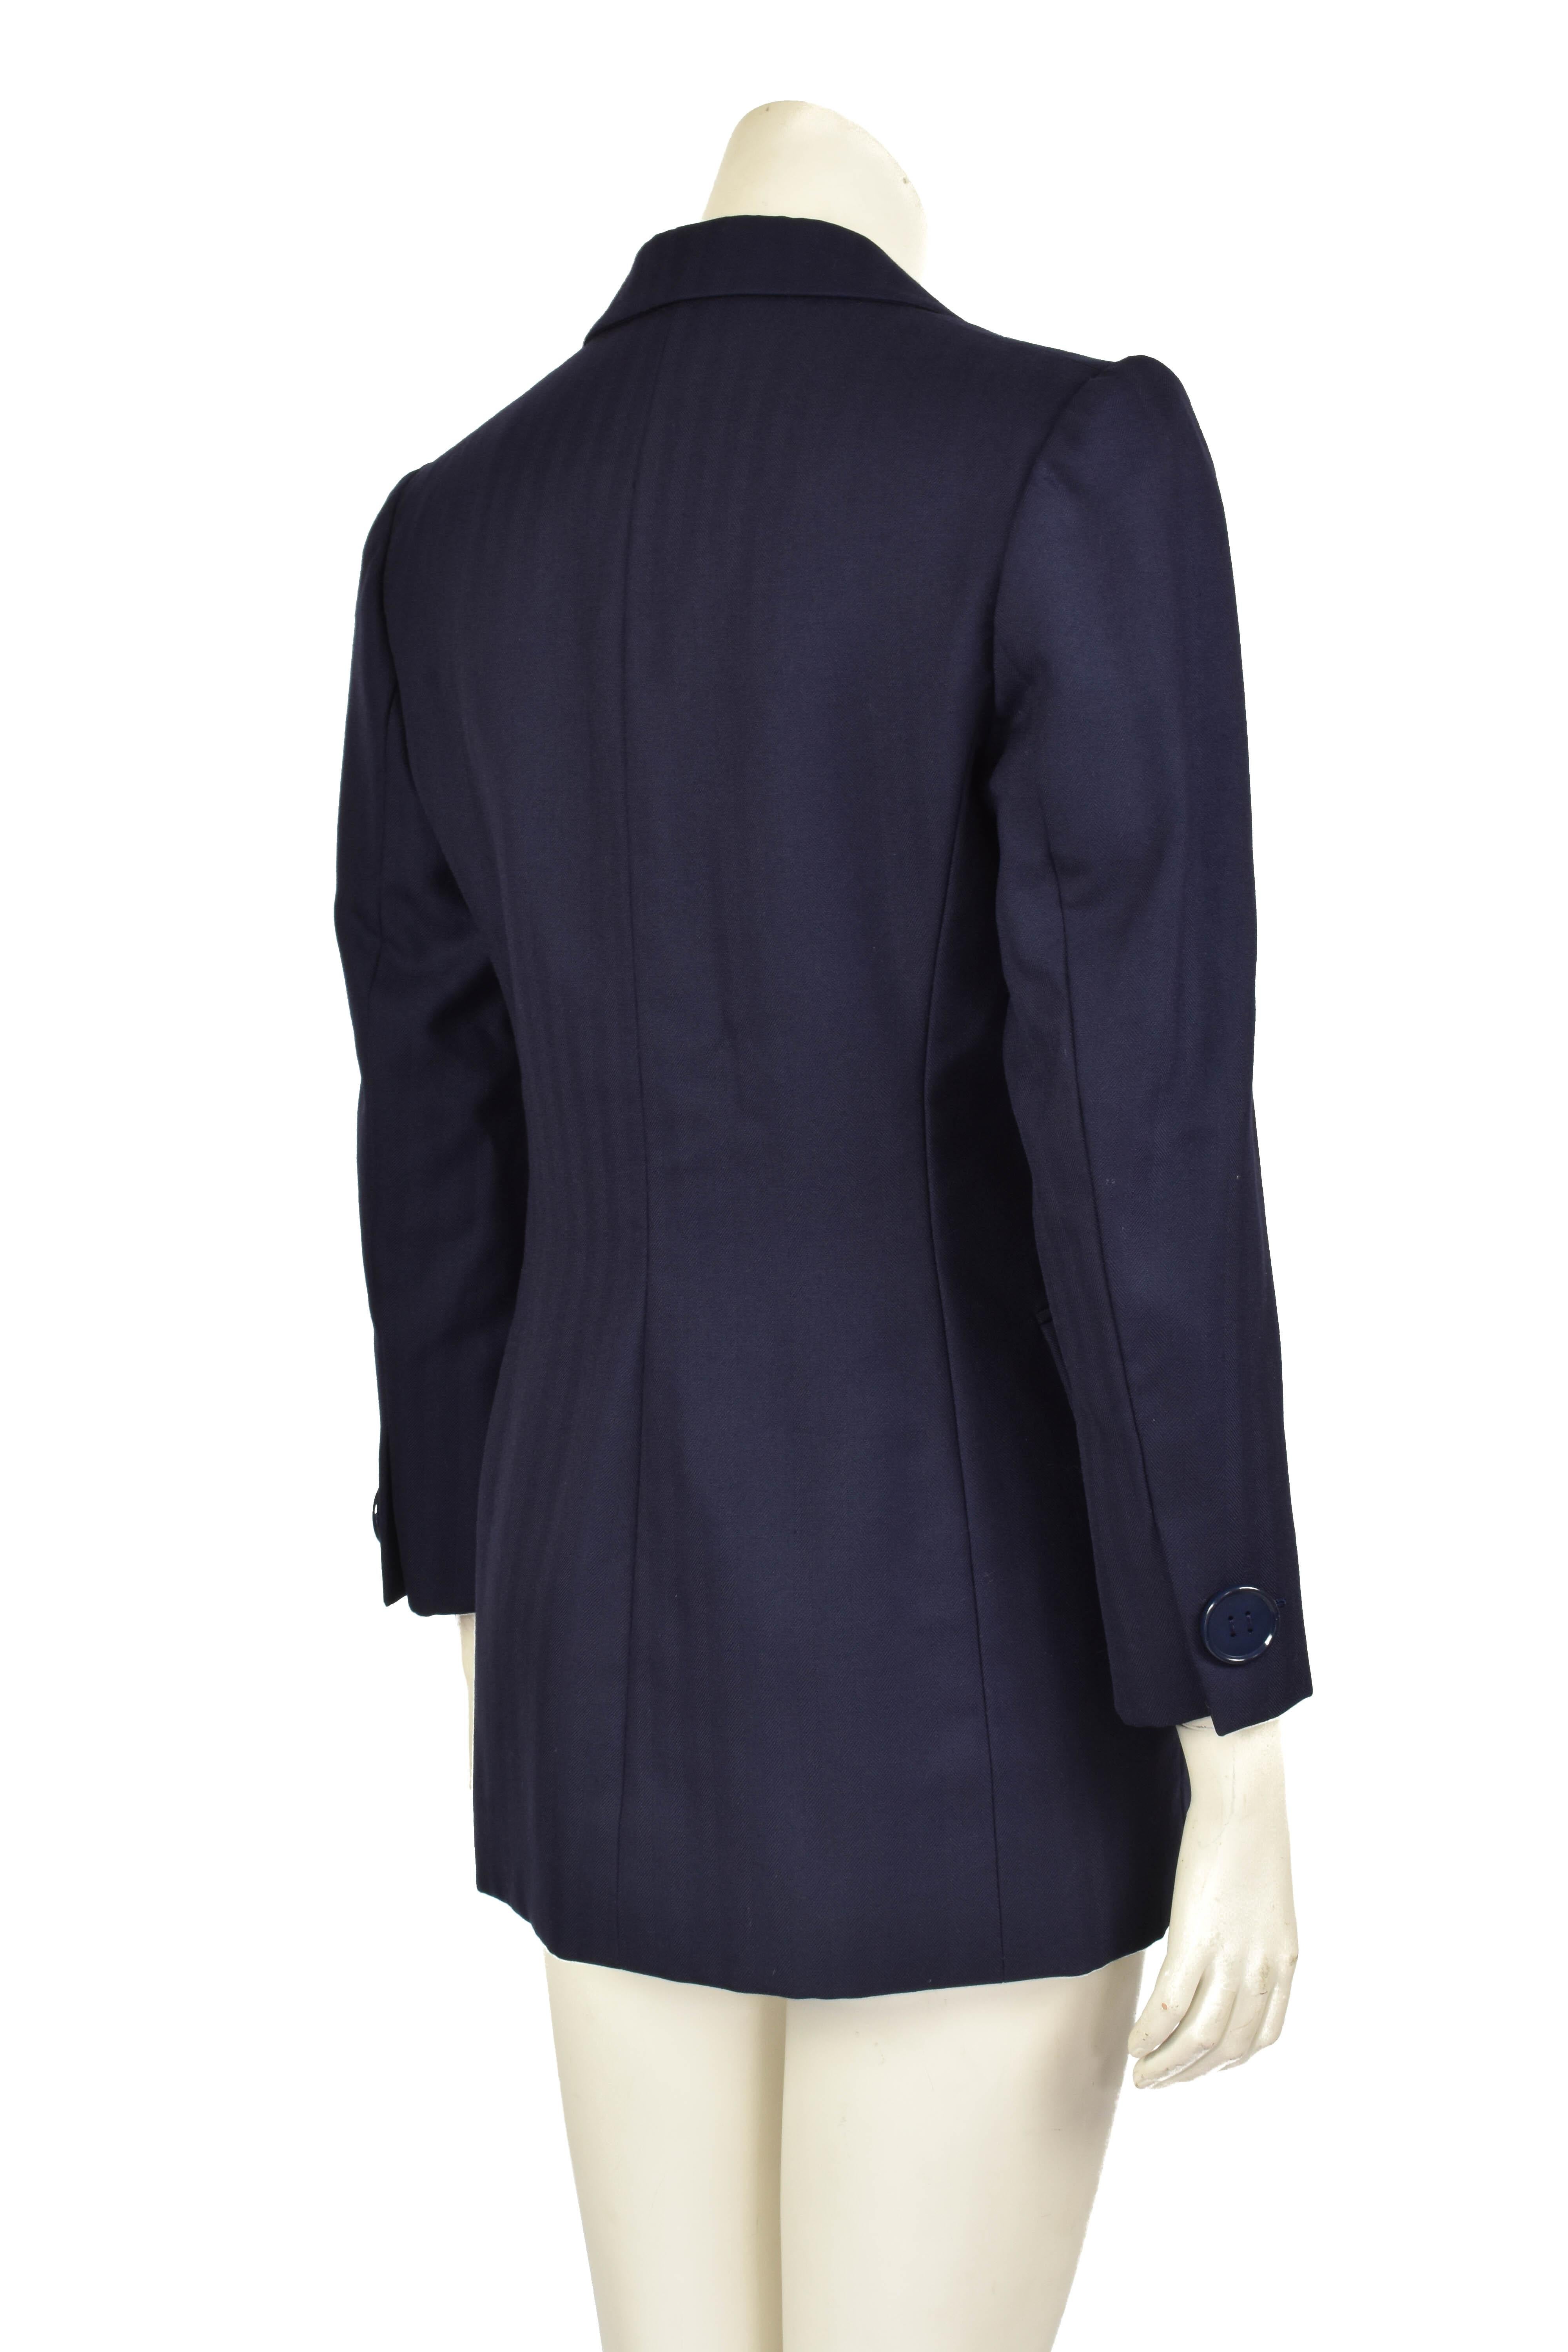 Women's FINAL SALE 1990s Christian Dior Haute Couture Navy Striped Chevron Blazer For Sale